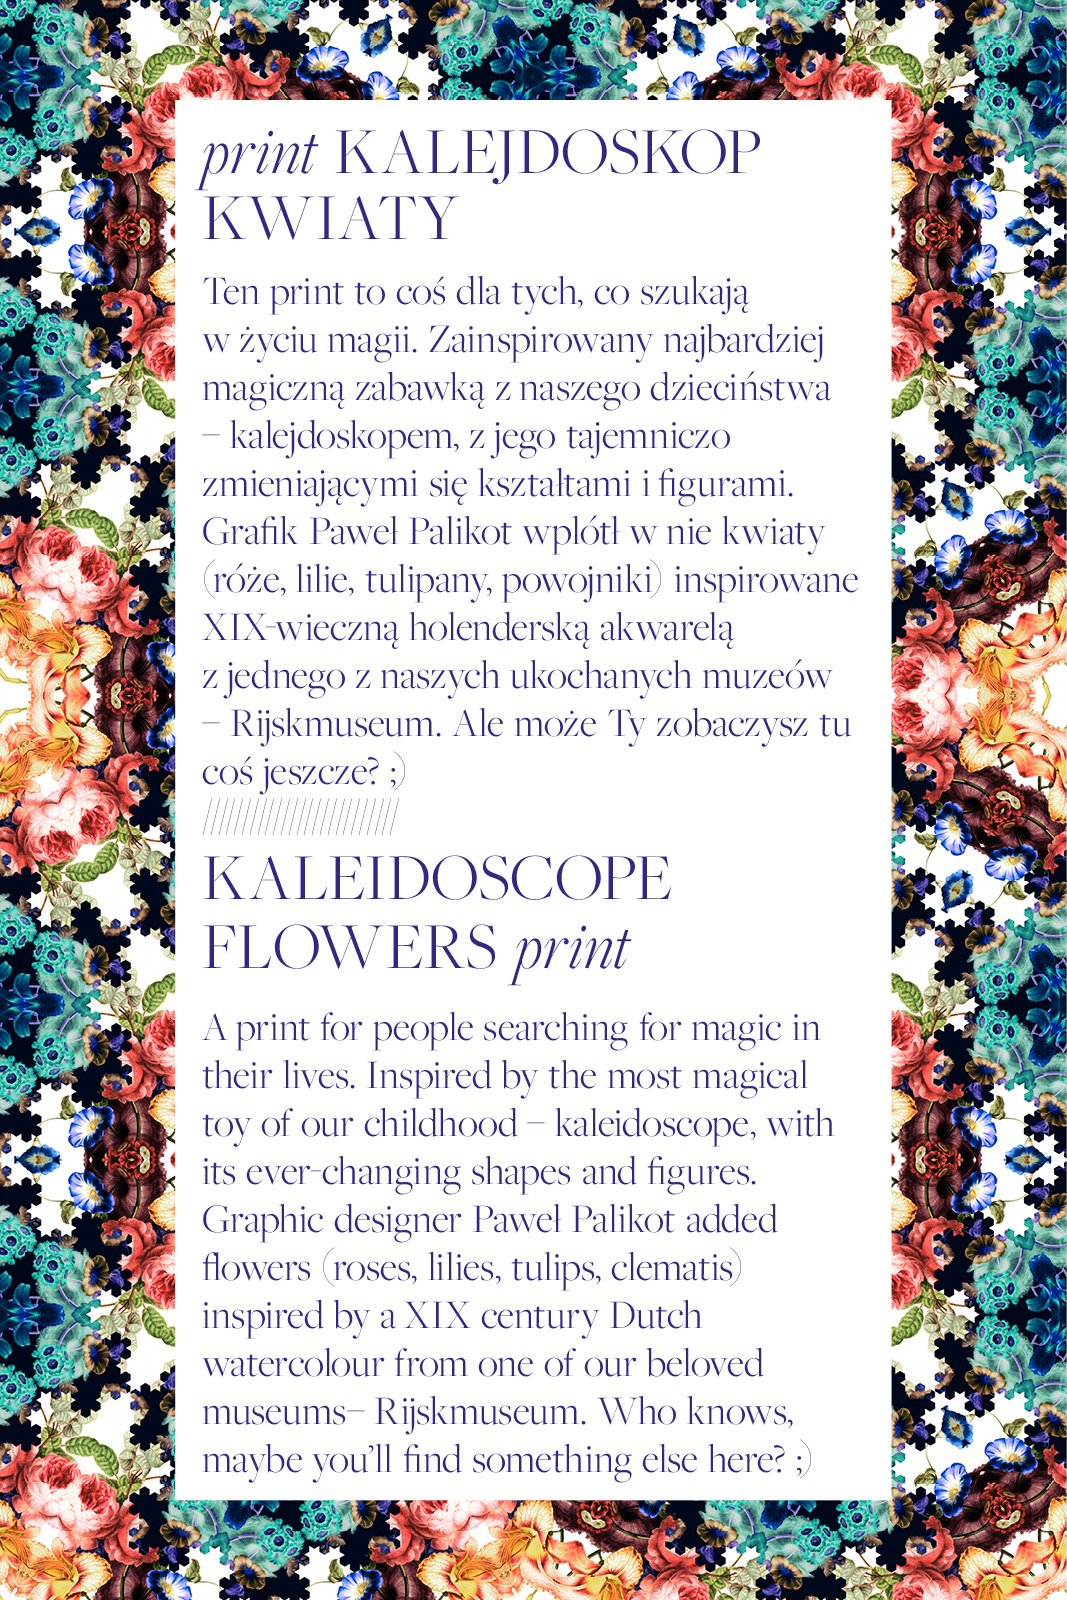 CRAZY IN LOVE flowers kaleidoscope print